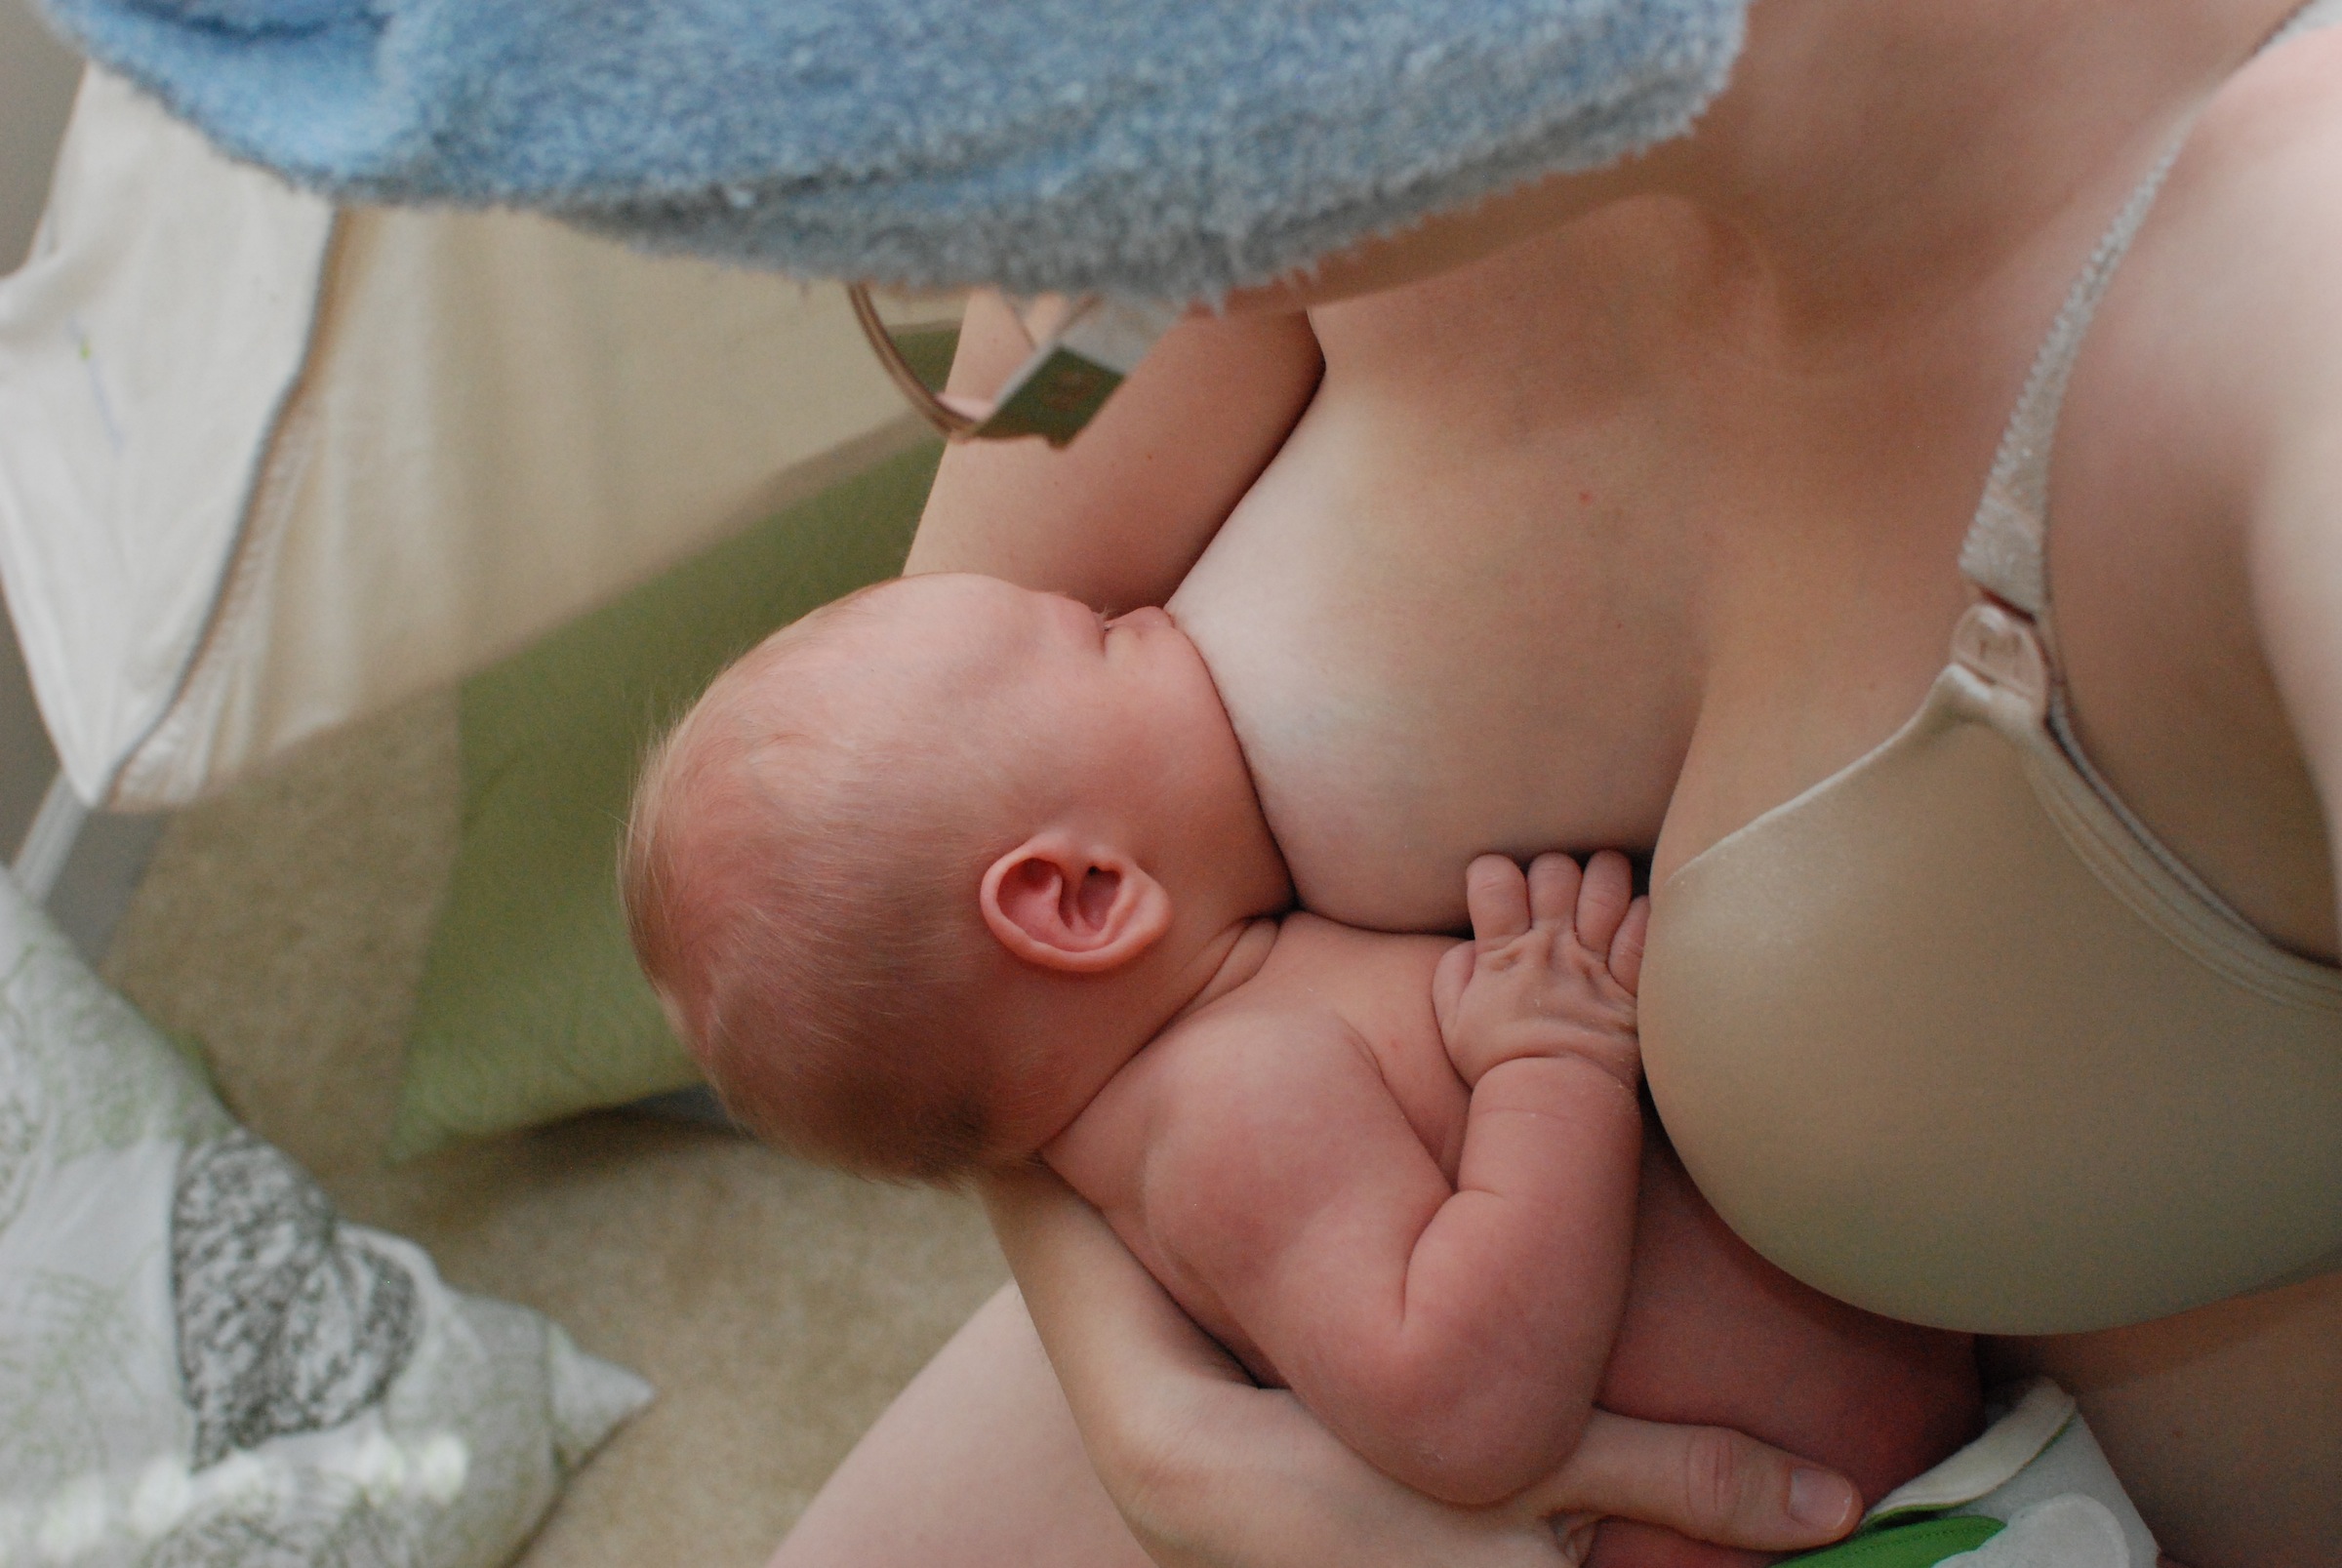 Xxx Pregnant While Breastfeeding - Pregnant Breastfeeding | Sex Pictures Pass